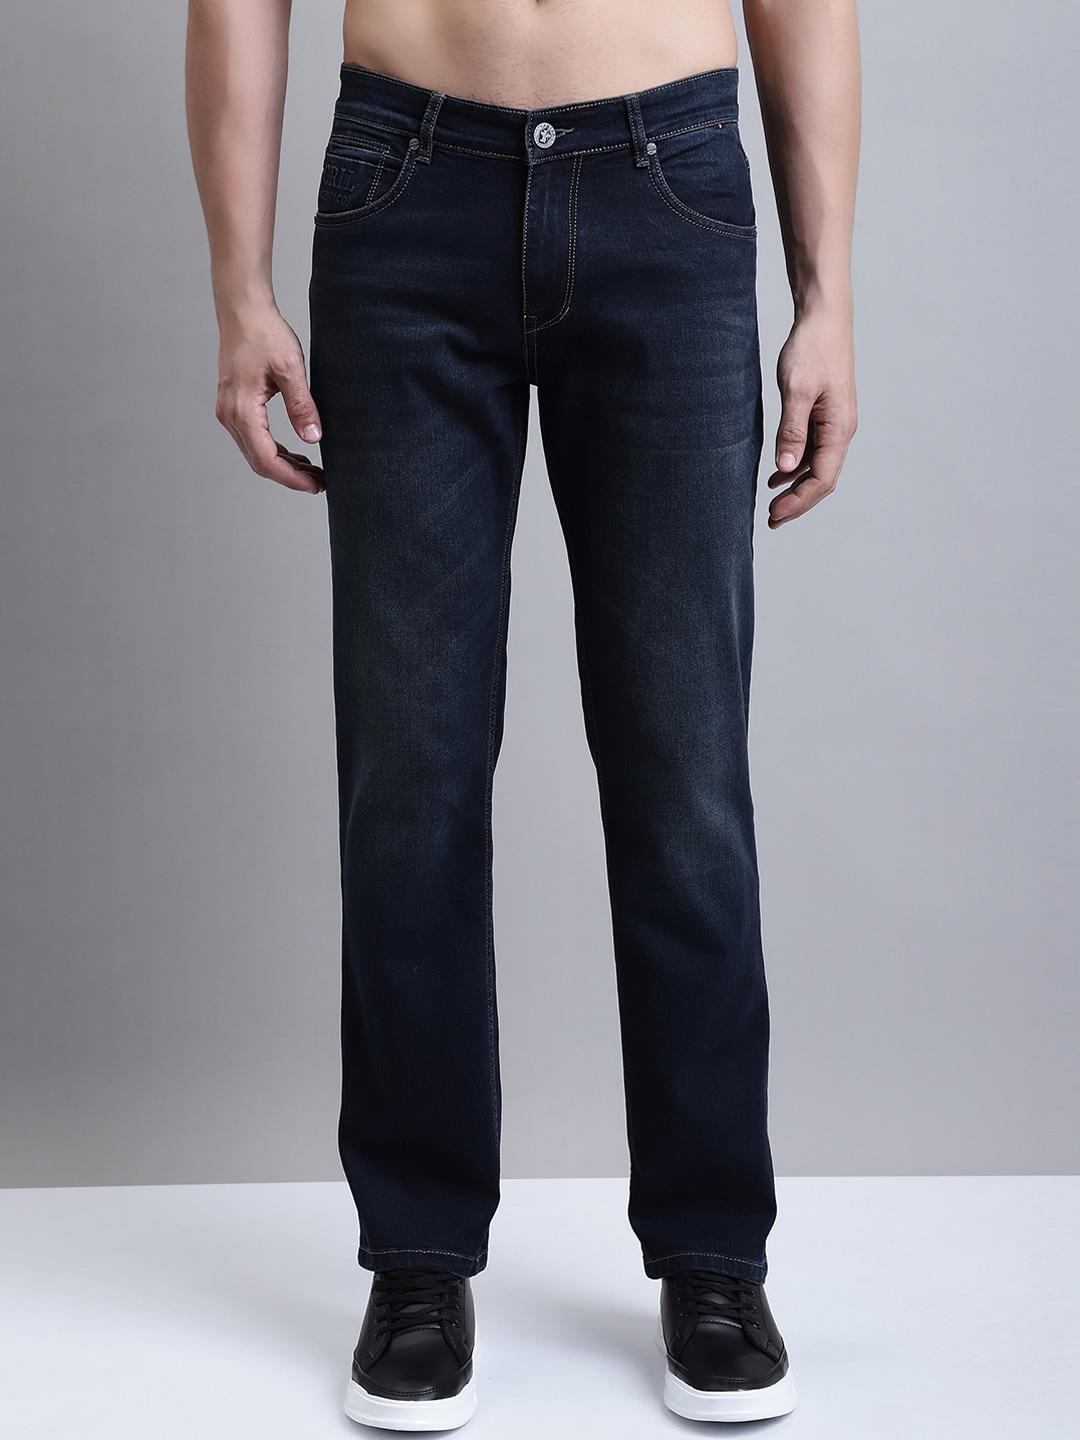 cantabil-men-comfort-light-fade-jeans